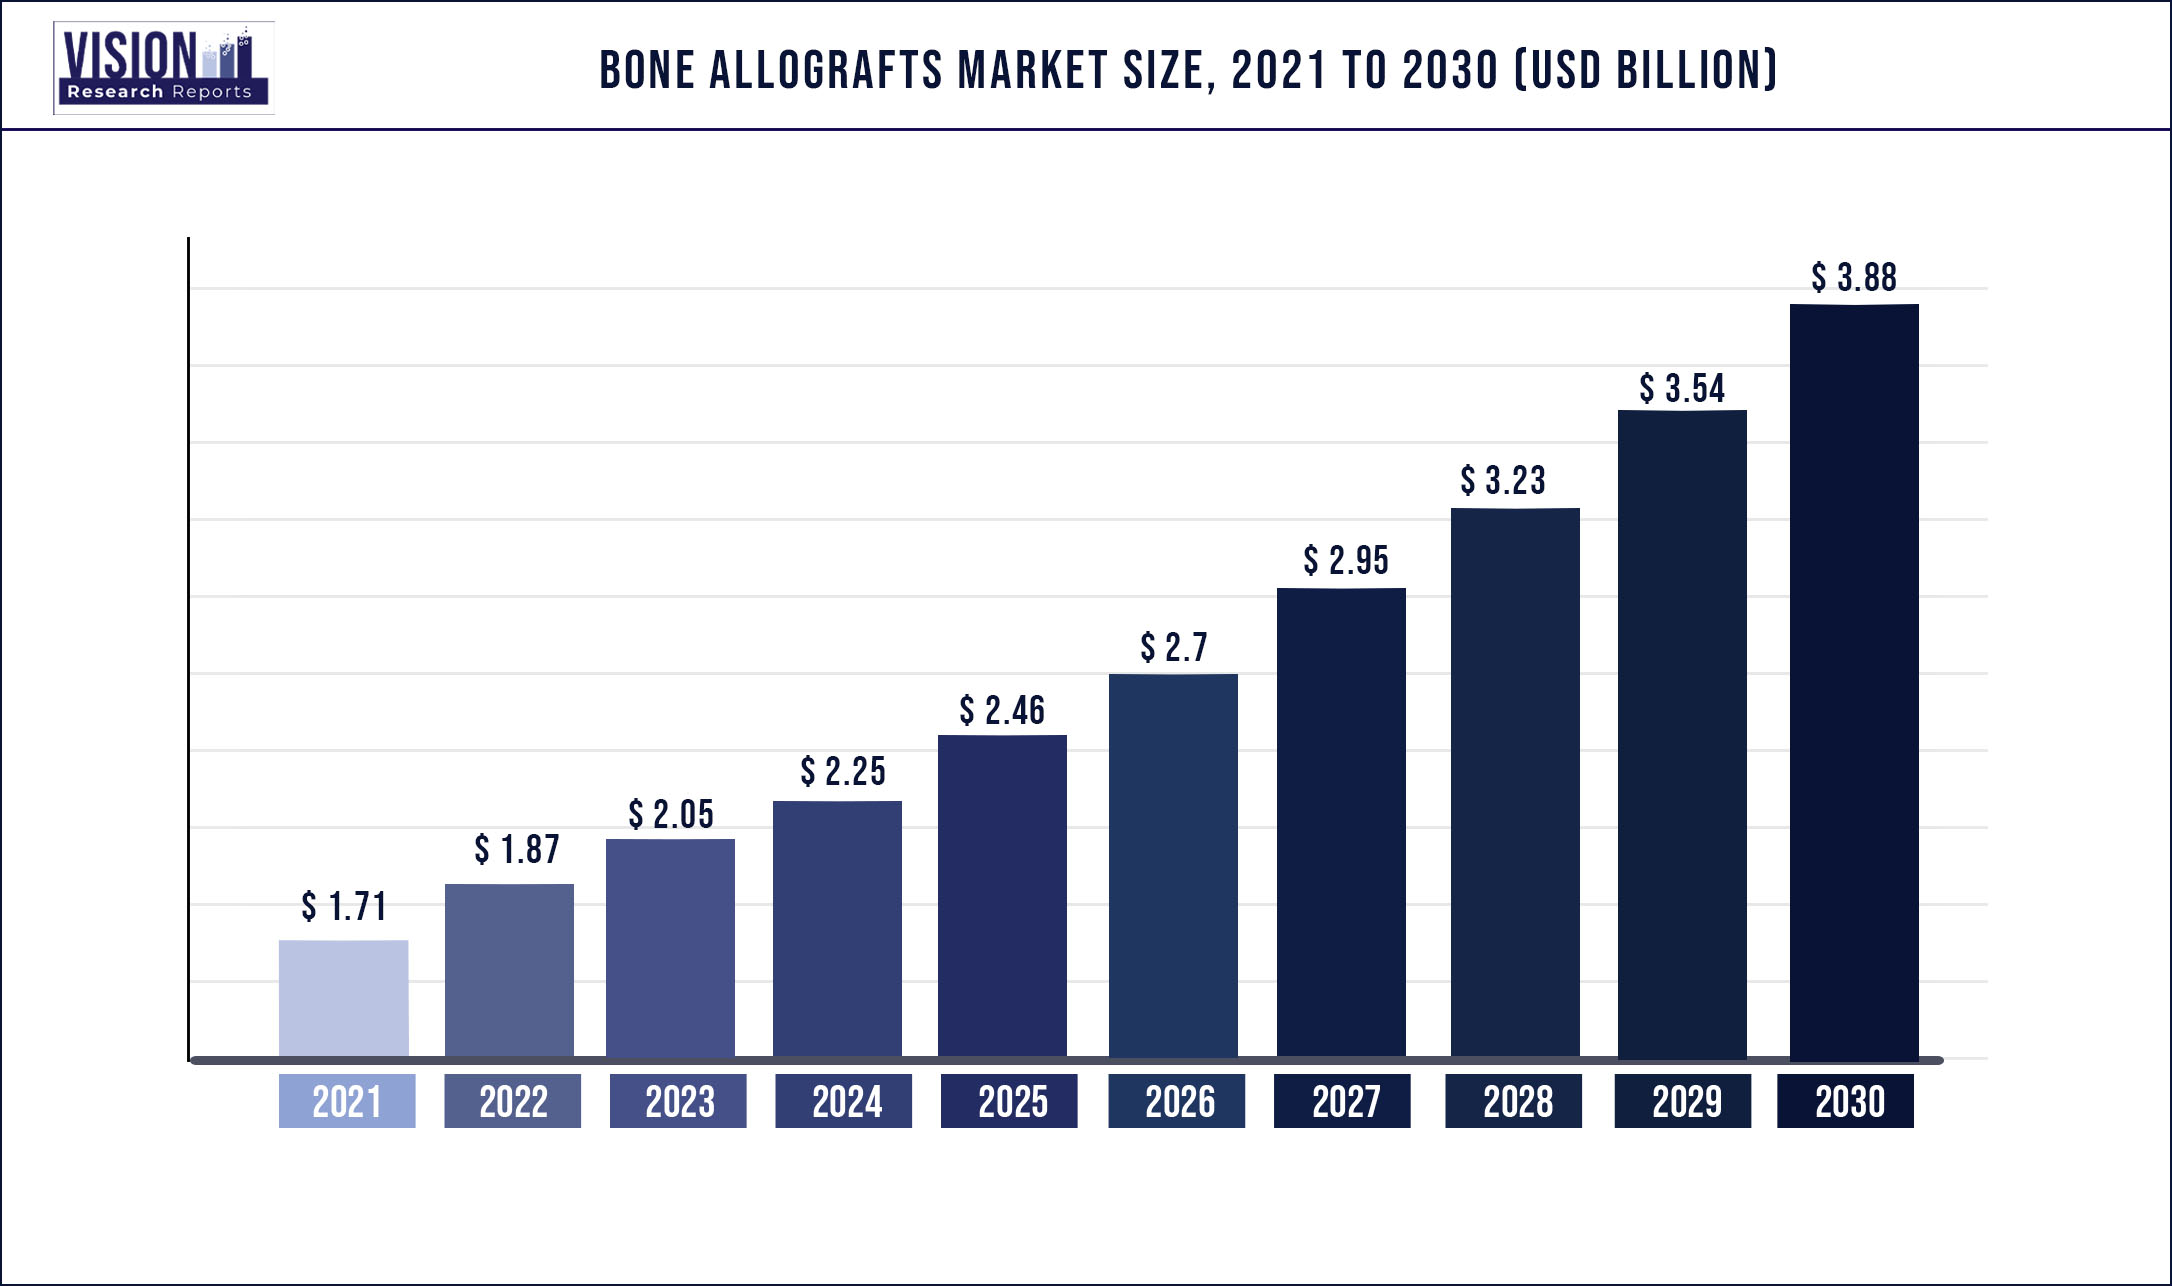 Bone Allografts Market Size 2021 to 2030